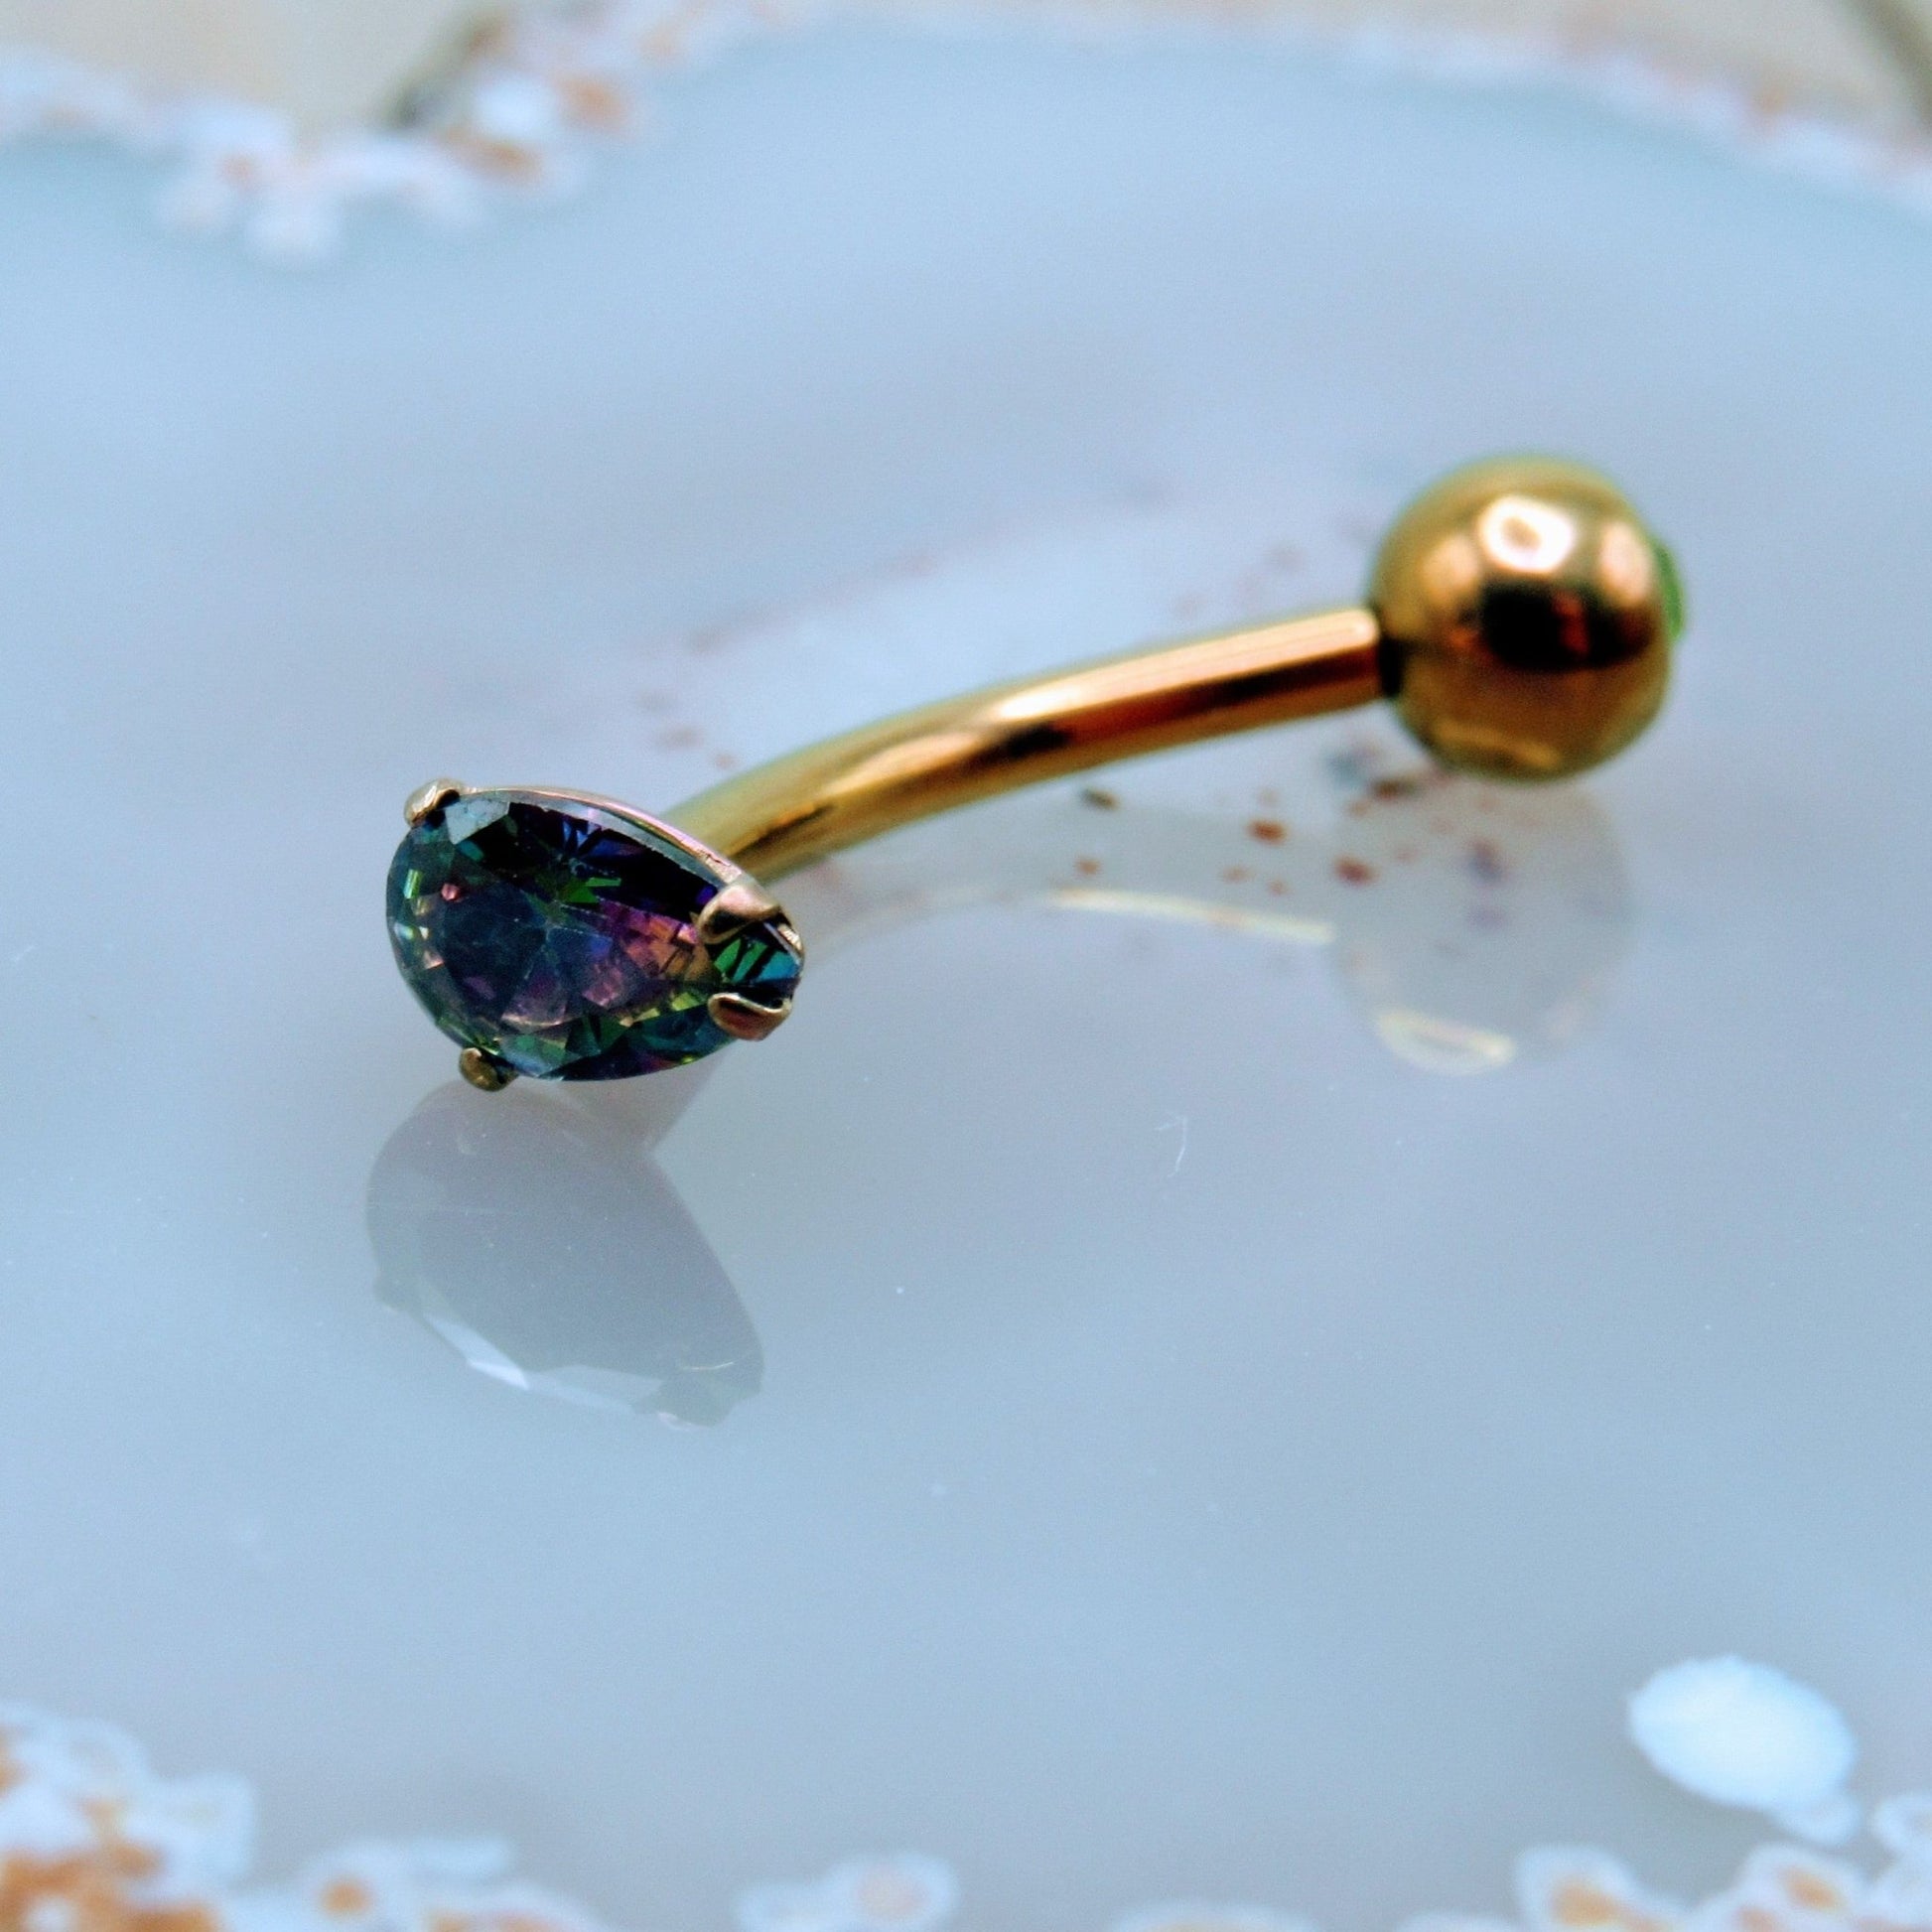 VCH piercing barbell 14g titanium anodized 1/2" 6mm gemstone pear cz clear mystic topaz sapphire blue internally threaded belly button ring hypoallergenic barbell - Siren Body Jewelry